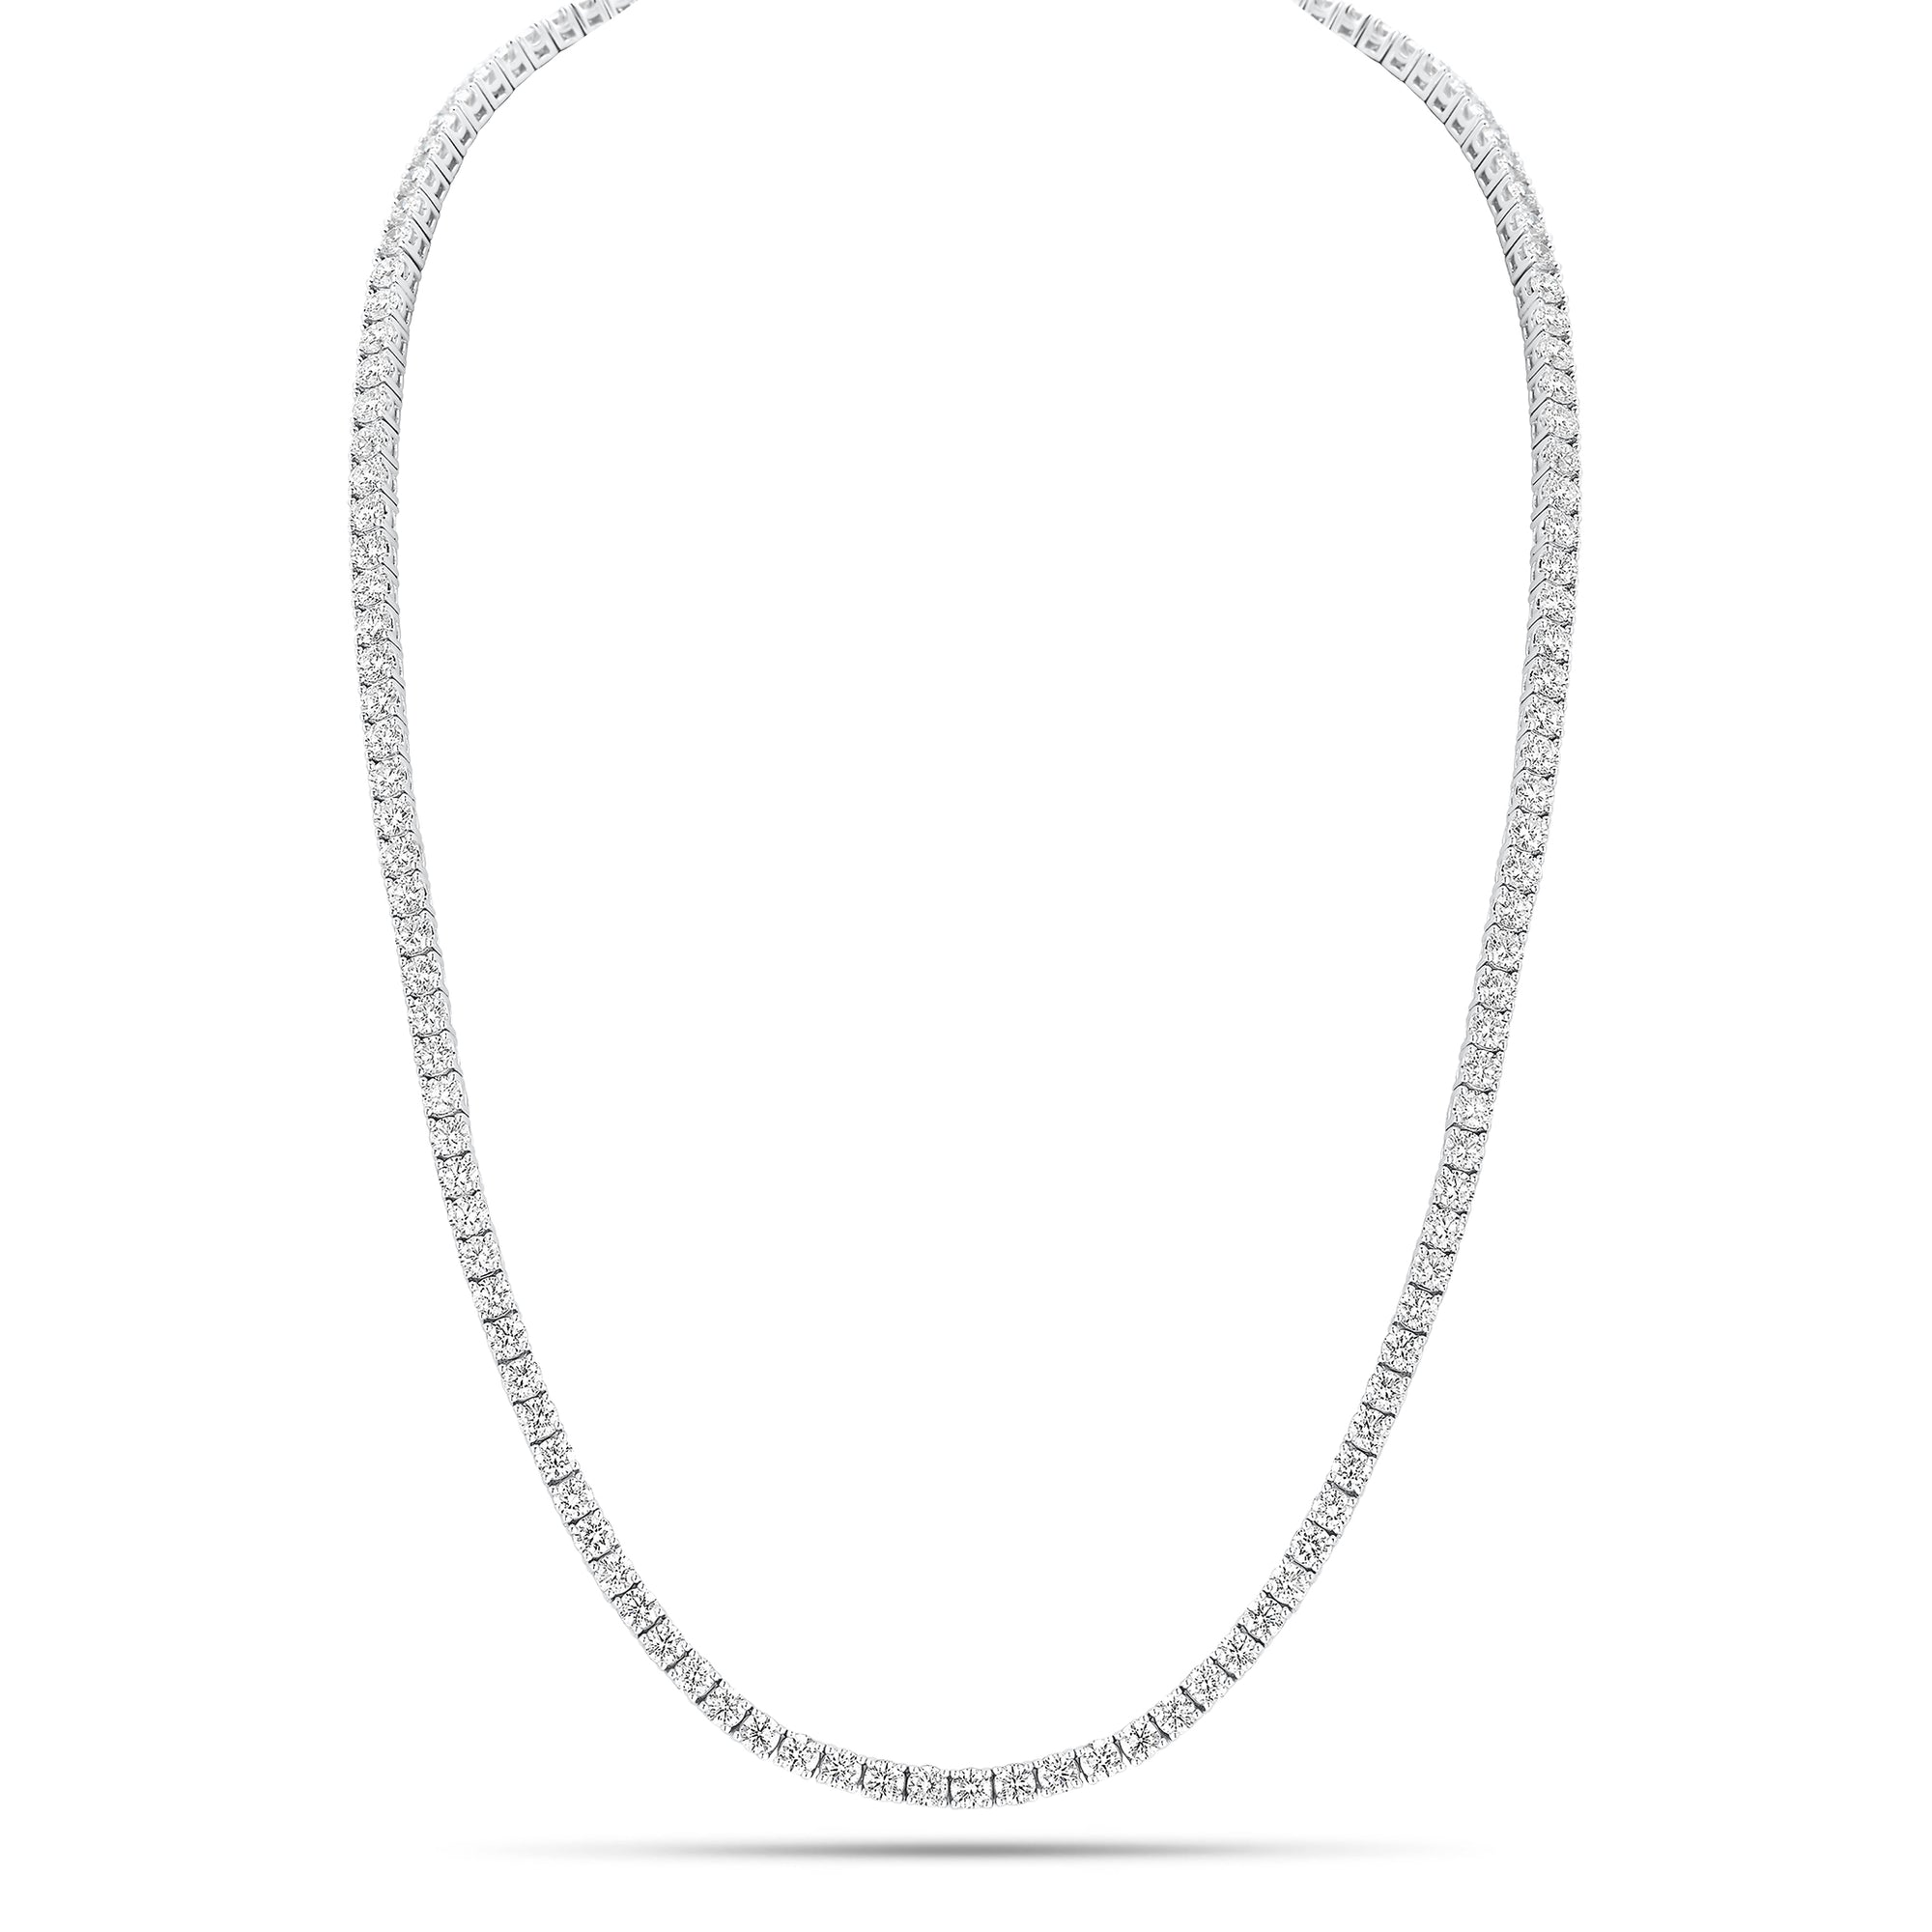 10.61 ct Diamond Tennis Necklace - 14K gold weighing 19.91 grams  - 166 round diamonds weighing 10.61 carats  - 16-18” length